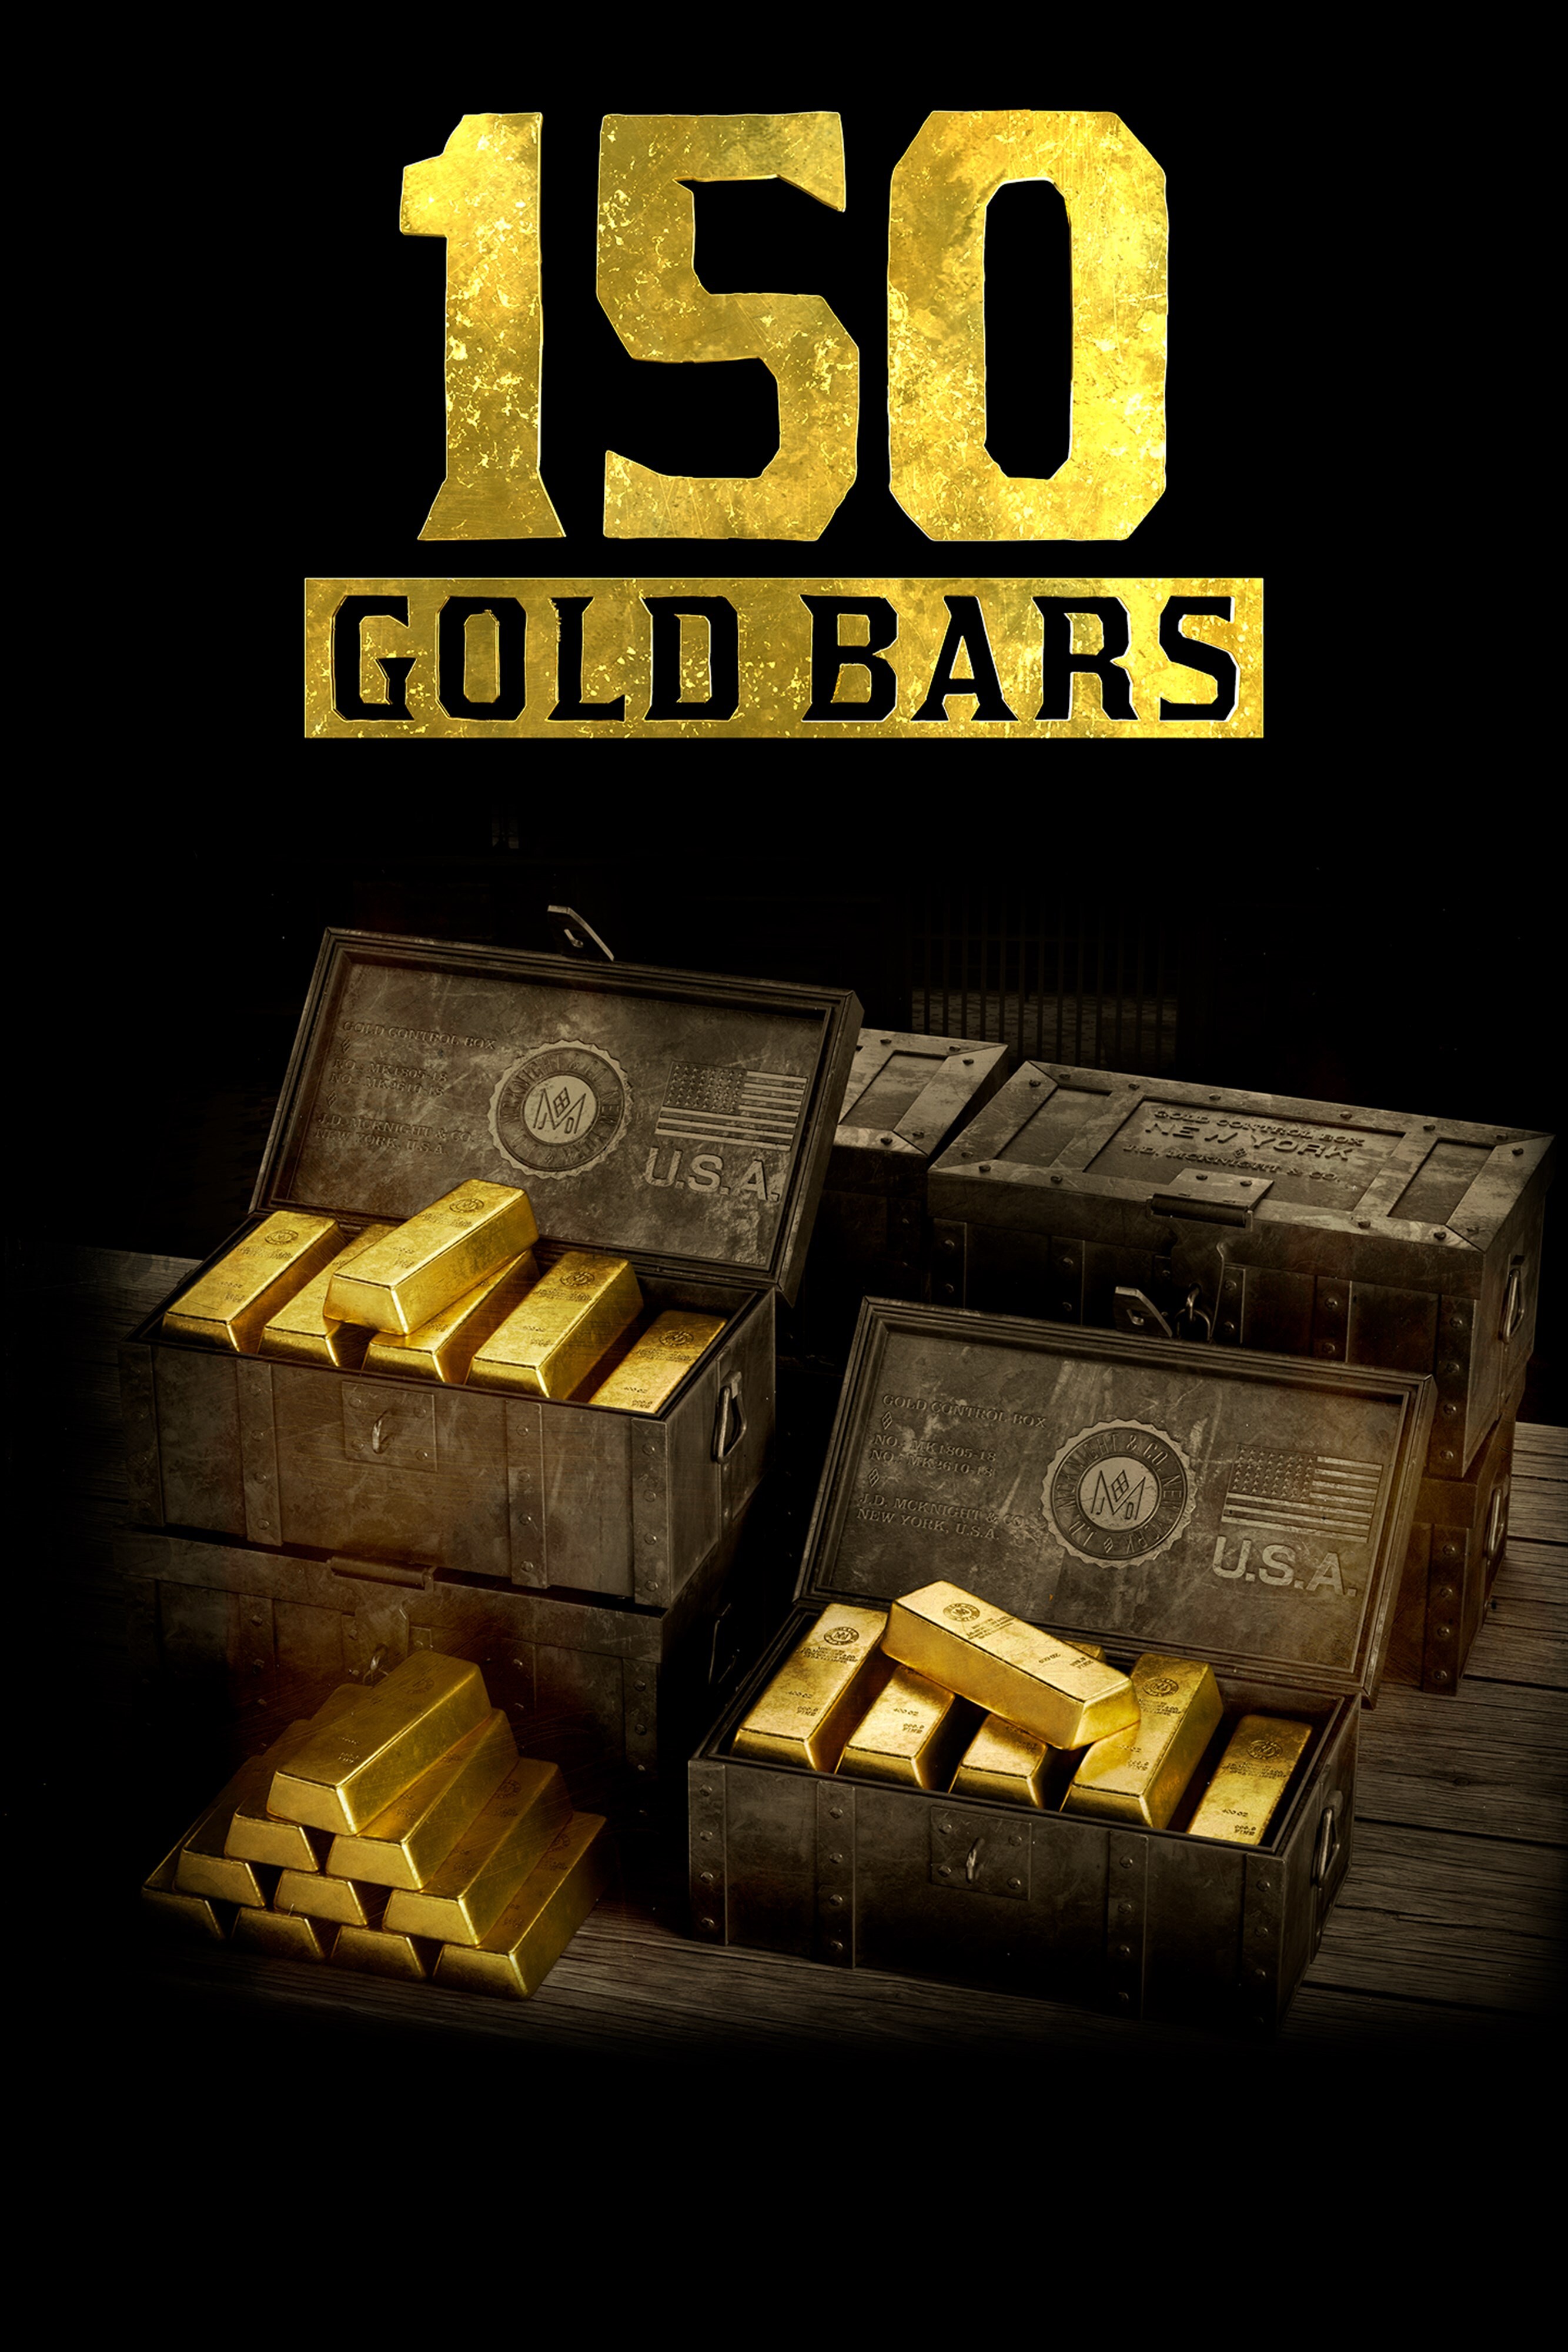 Rockstar Read Dead Redemption 2: 150 Gold Bars